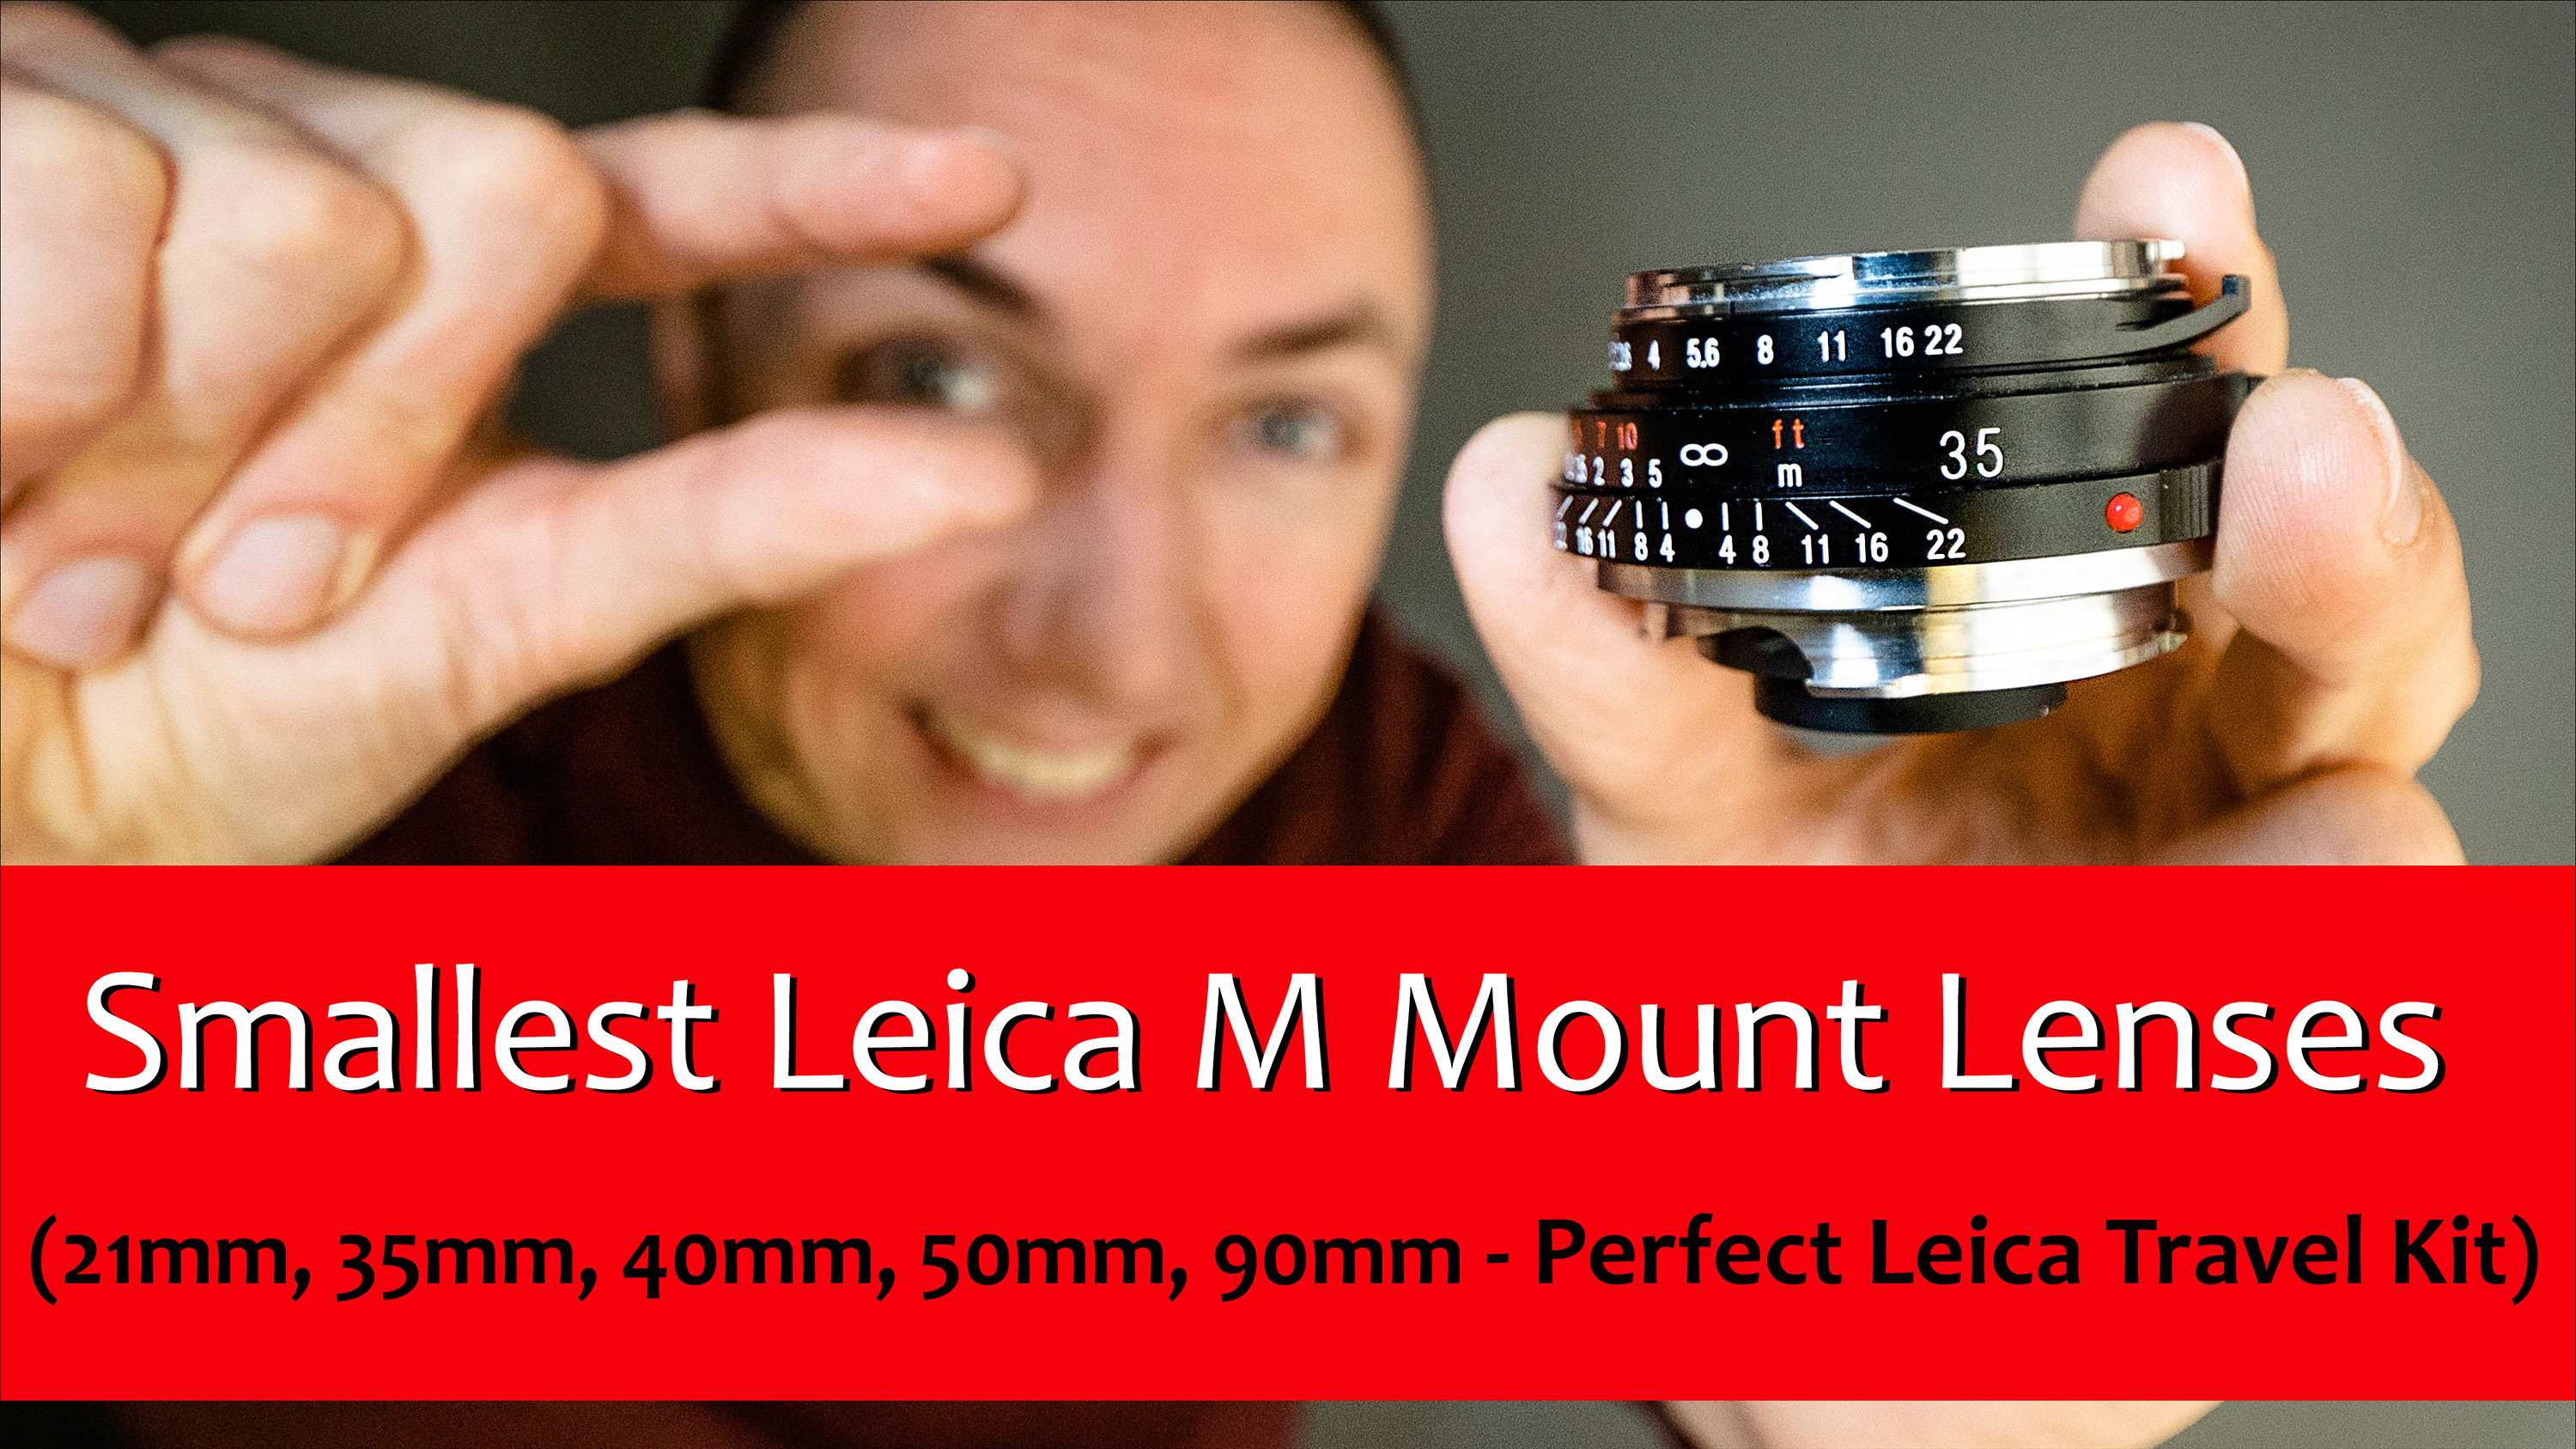 theater Republikeinse partij vervoer Smallest Leica M Mount Lenses - 21mm, 35mm, 40mm, 50mm, 90mm)